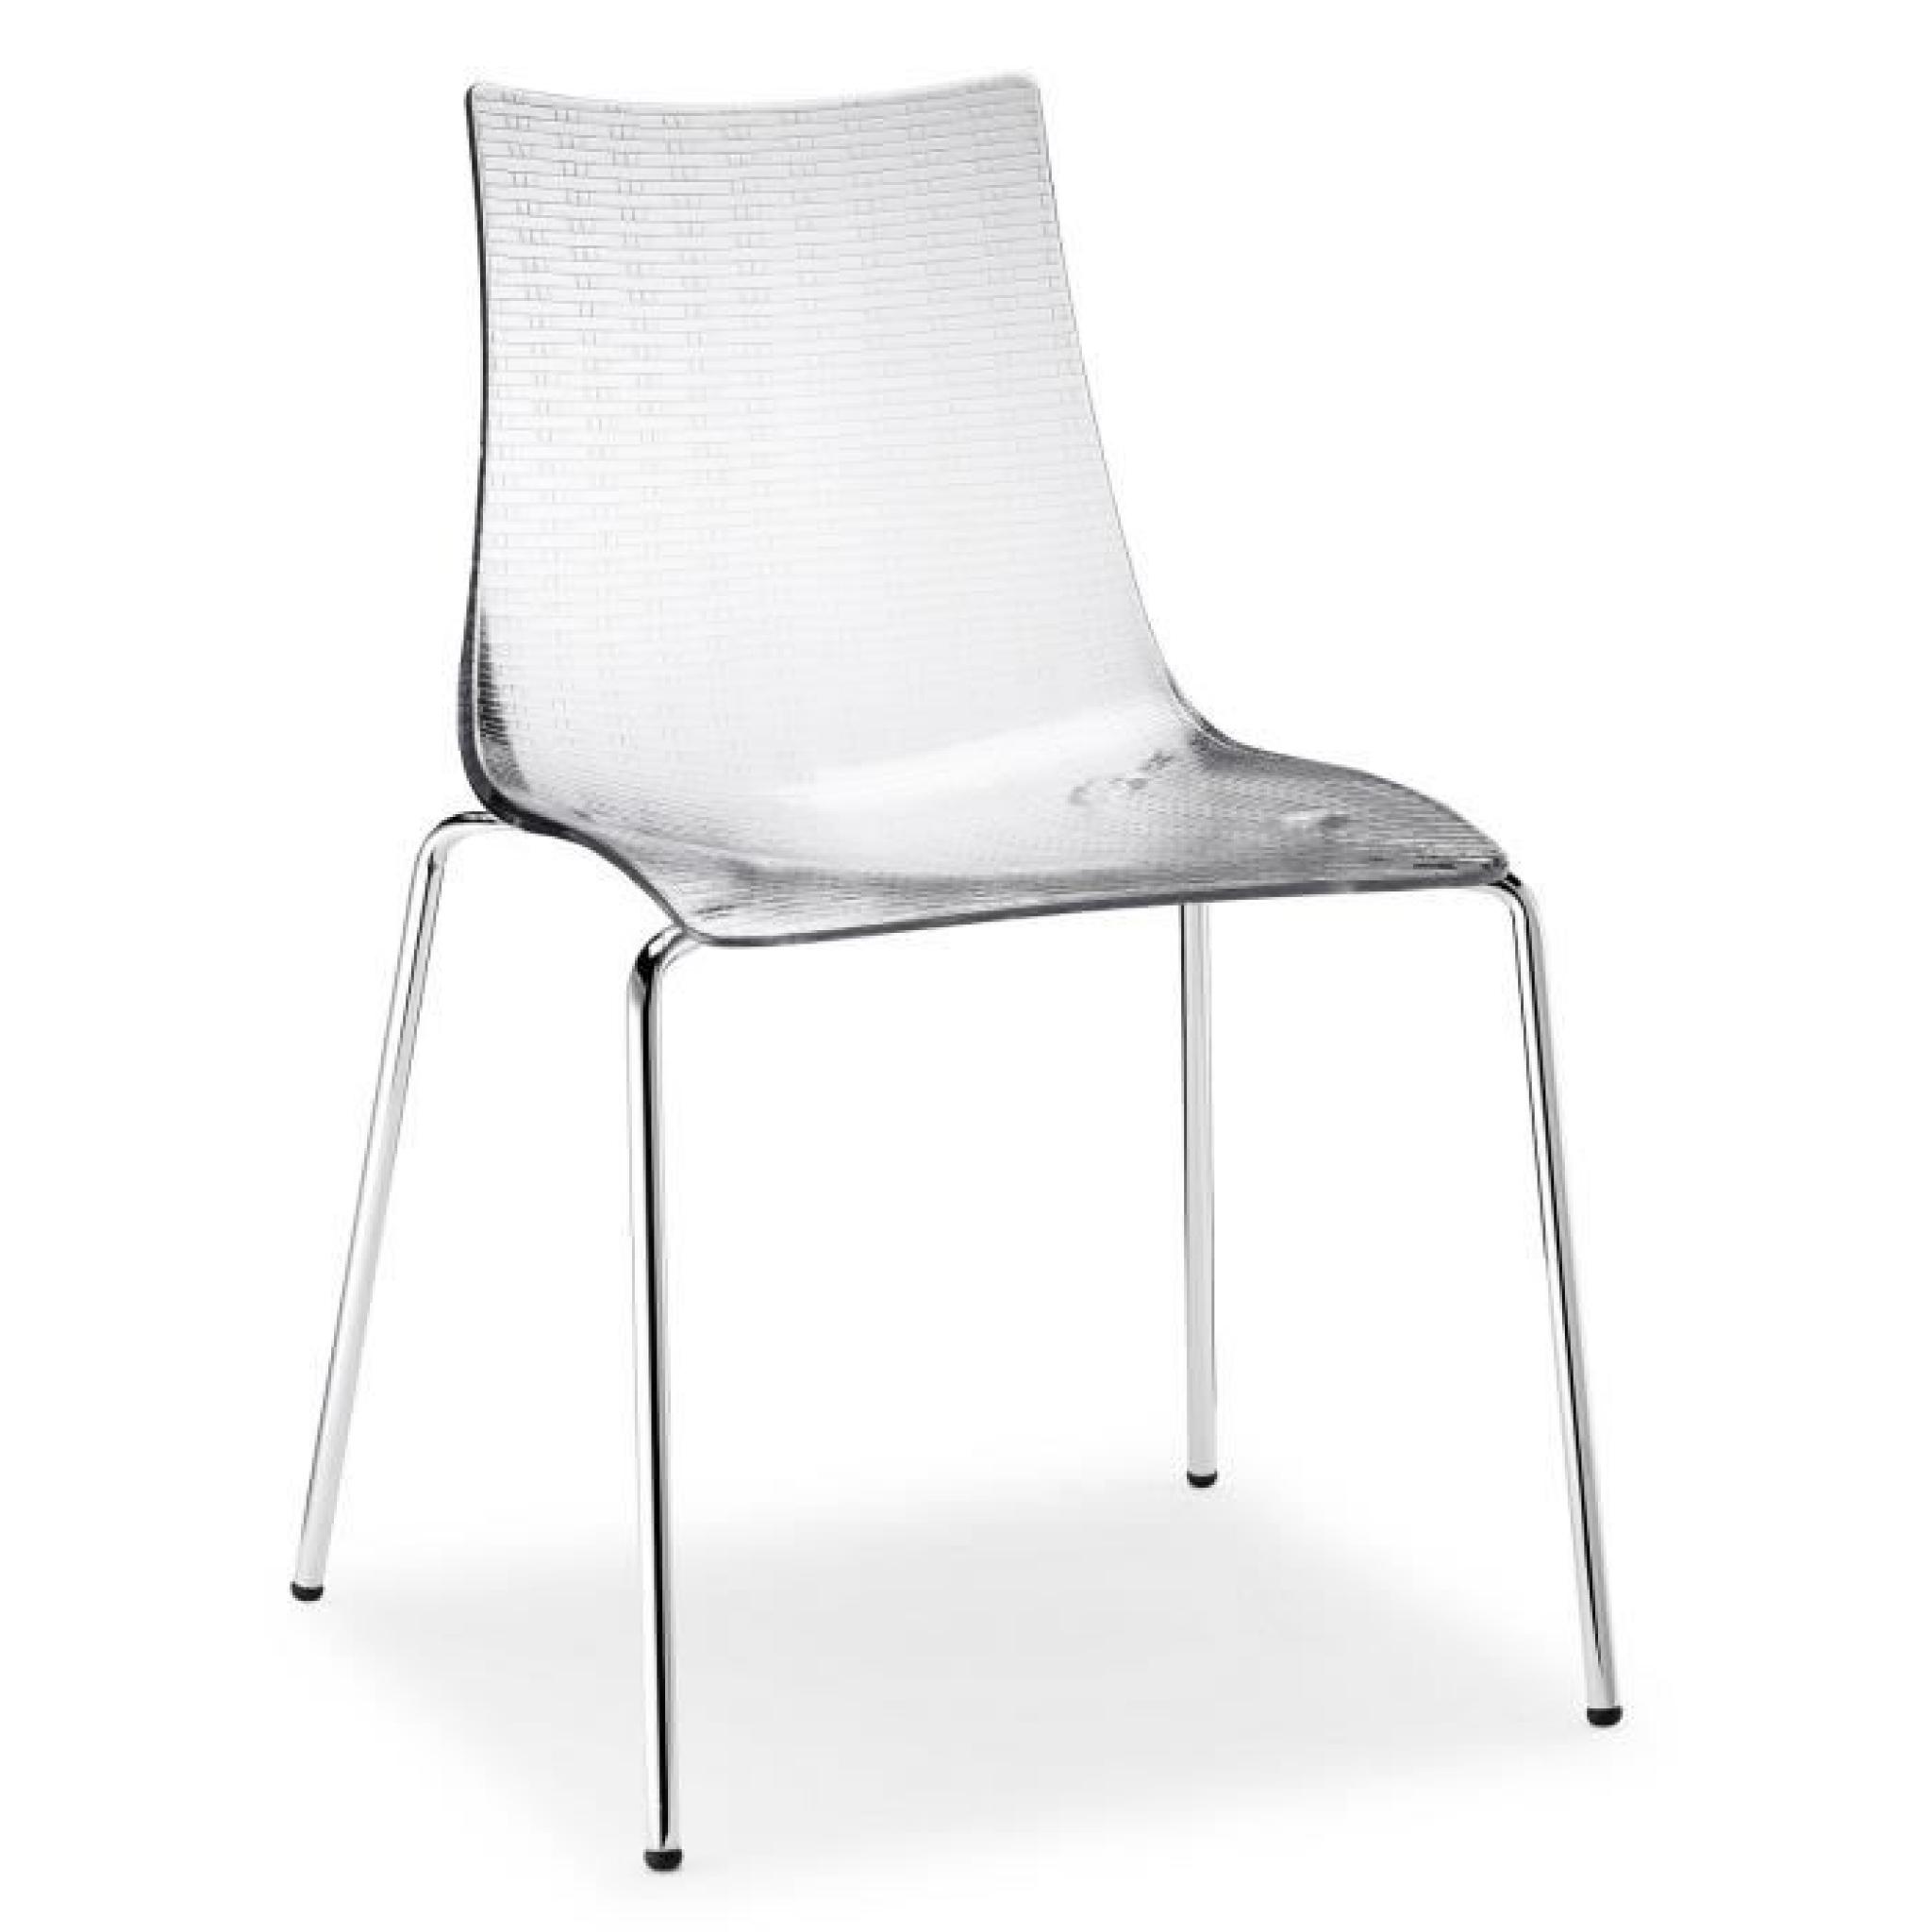 Chaise transparente design - DEA SCRATCHPROOF 4 legs transparente - deco